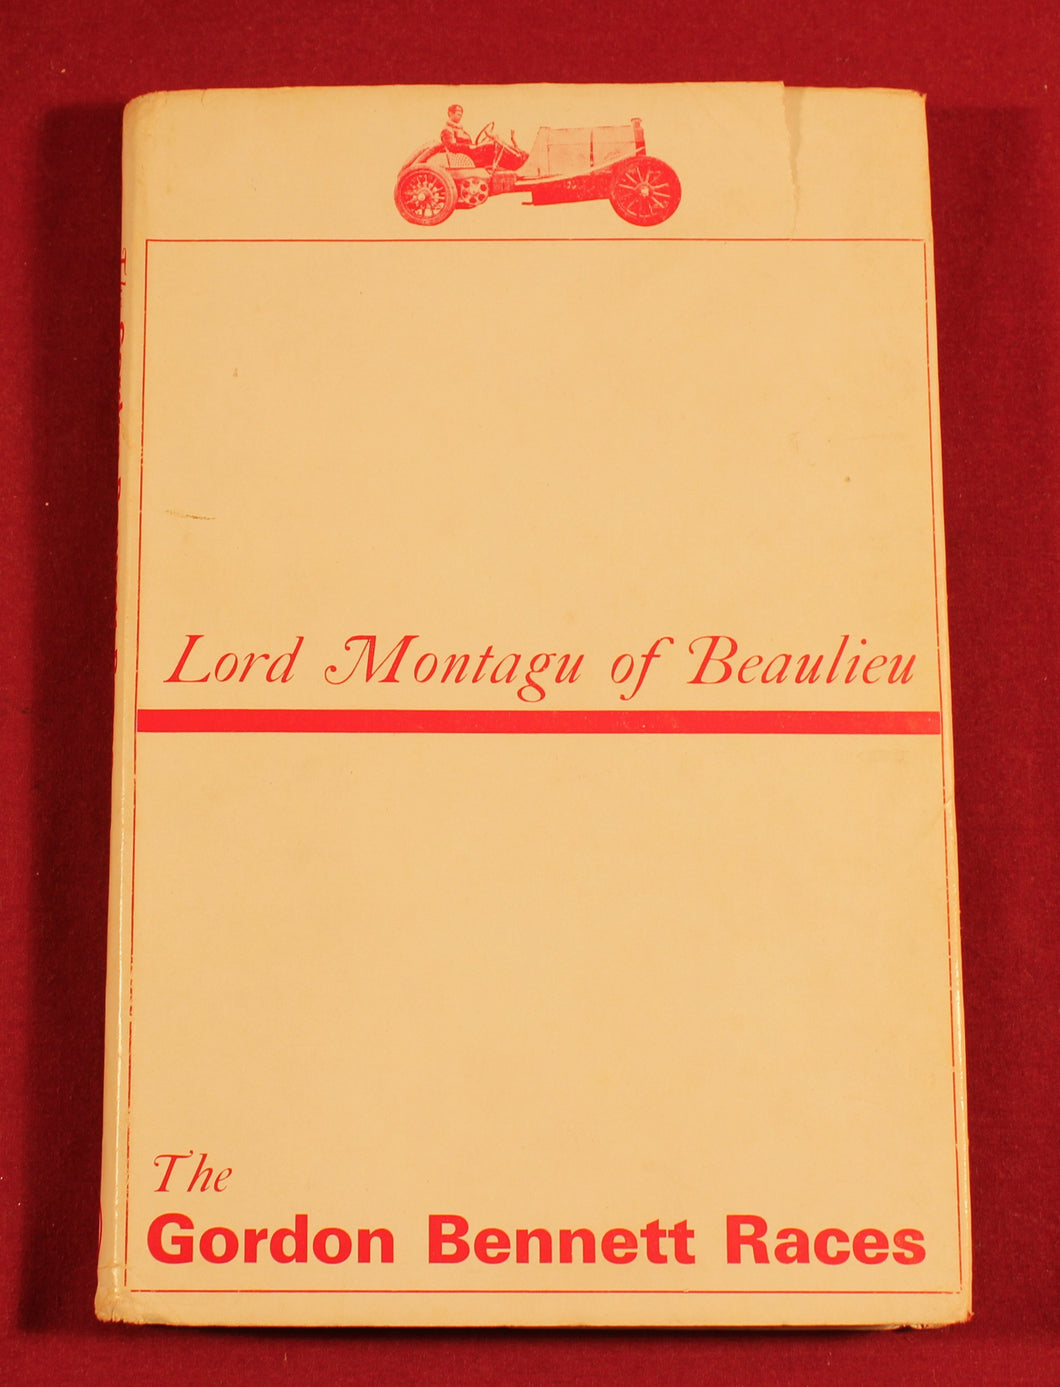 THE GORDON BENNETT RACES by LORD MONTAGU OF BEAULIEU 1965 EDITION